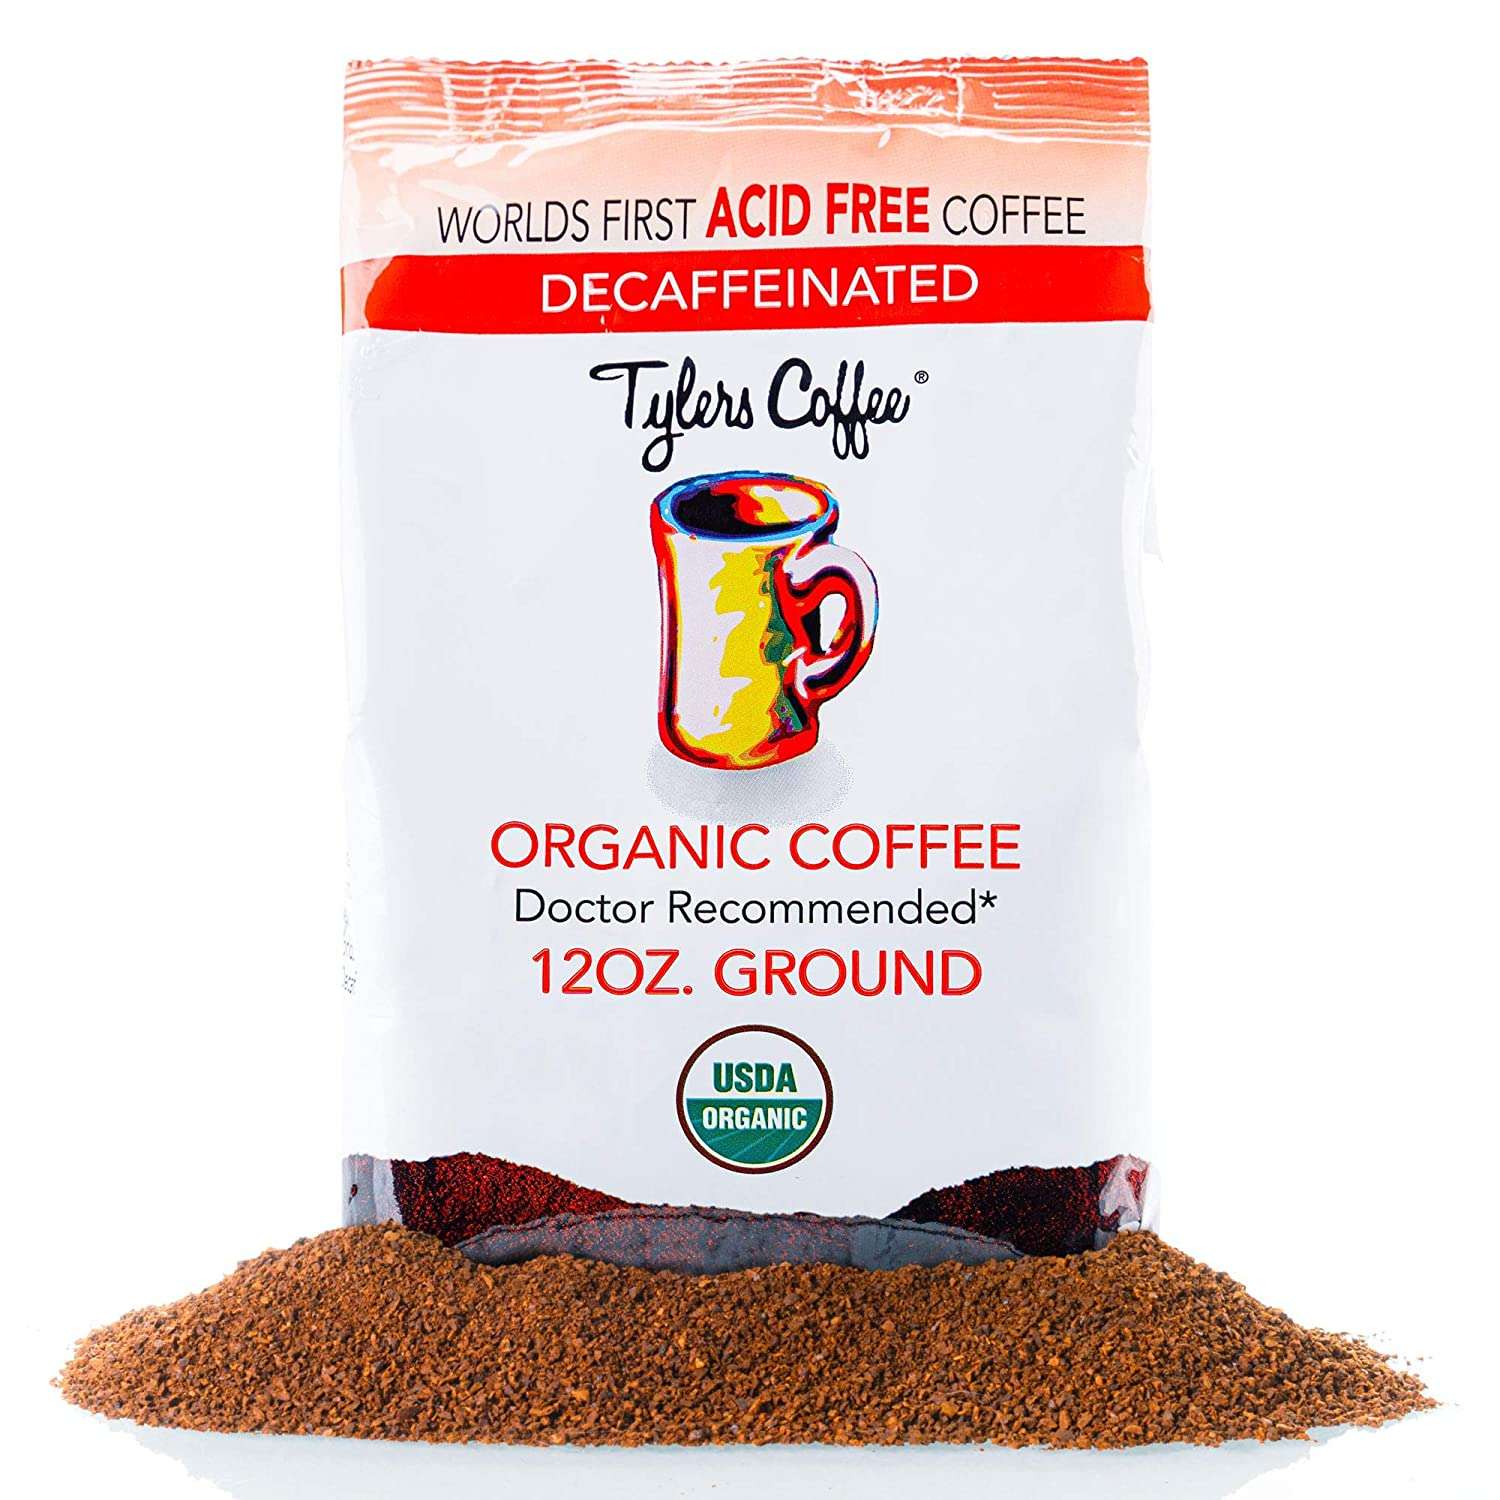 Is Organic Decaf Coffee Acidic